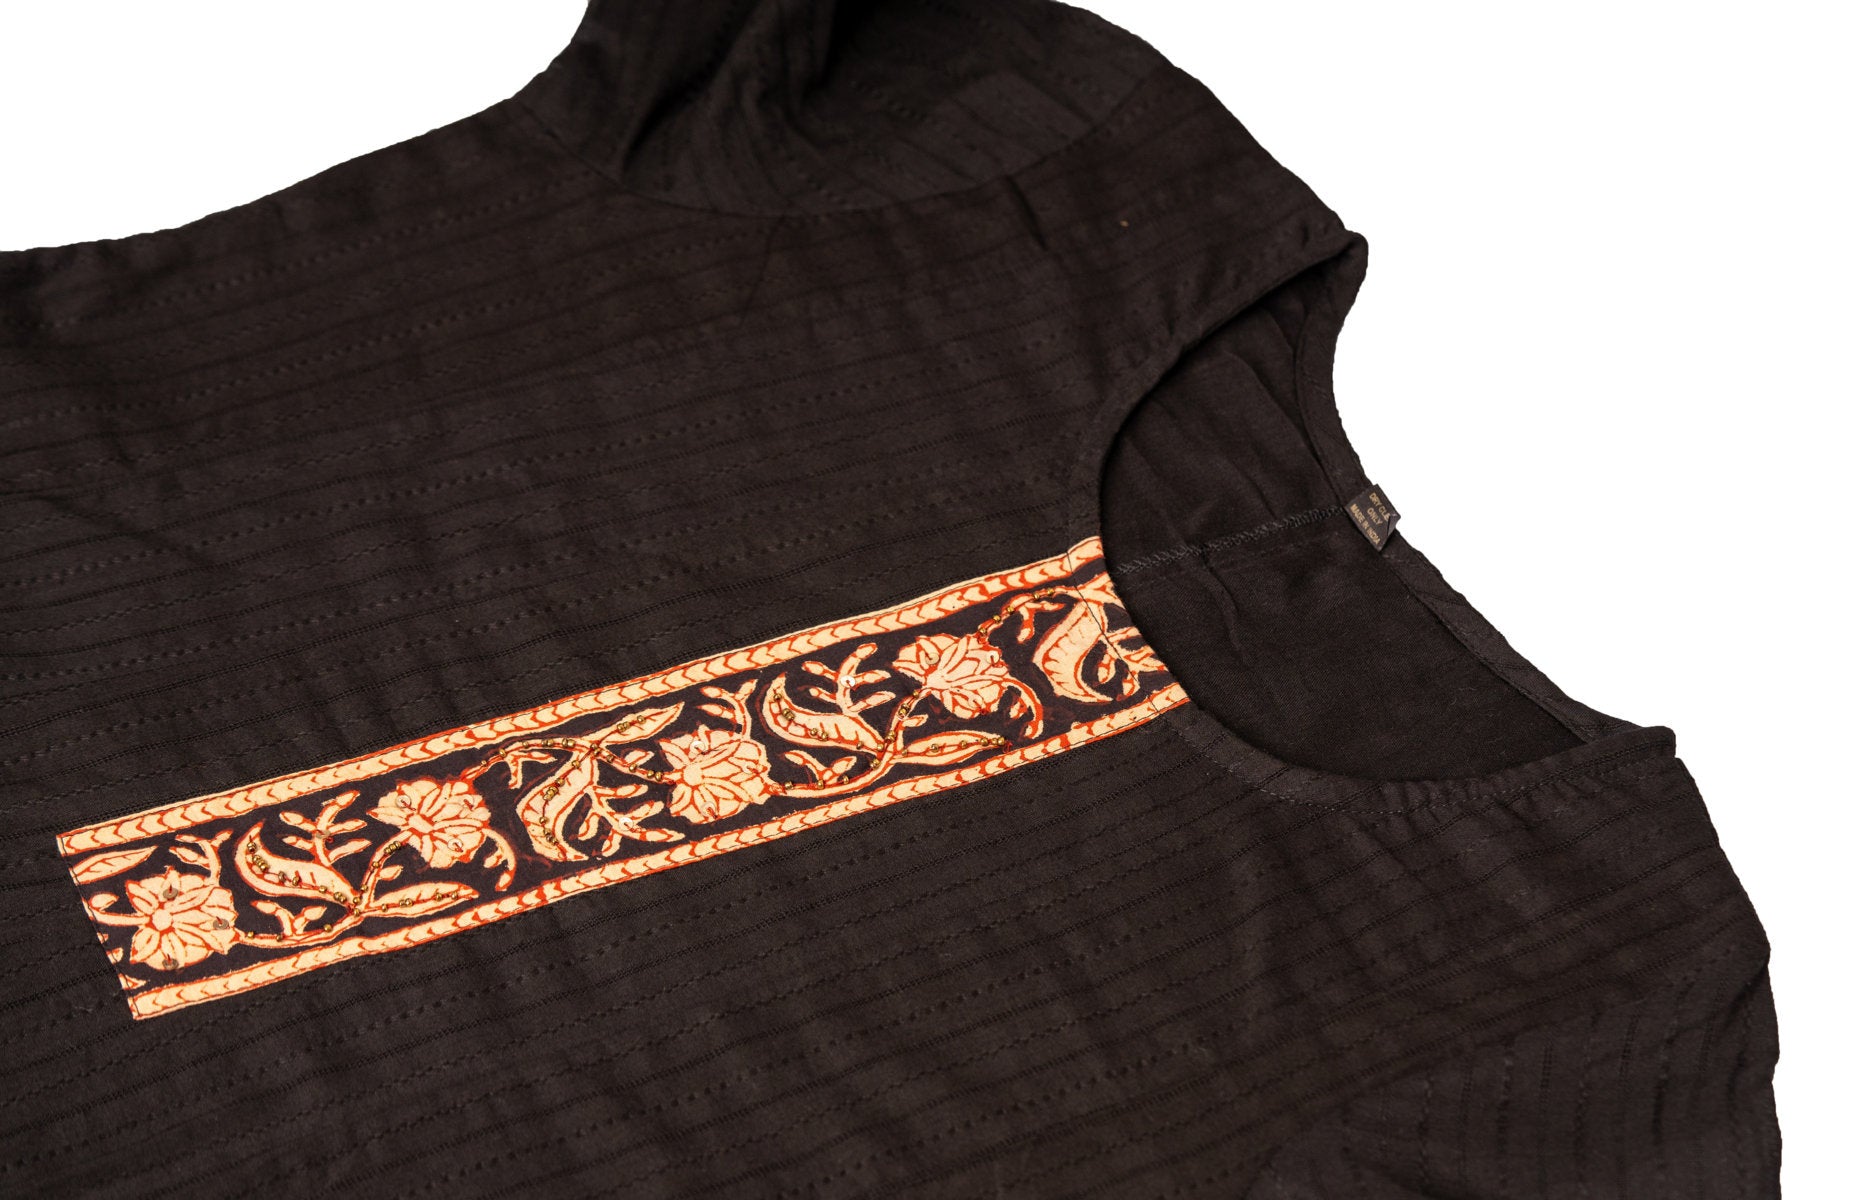 3 Piece Salwar - 100% Cotton black salwar with beige kalamkari prints.Beige color 2 metre long dupatta with block printed kalamkari design.